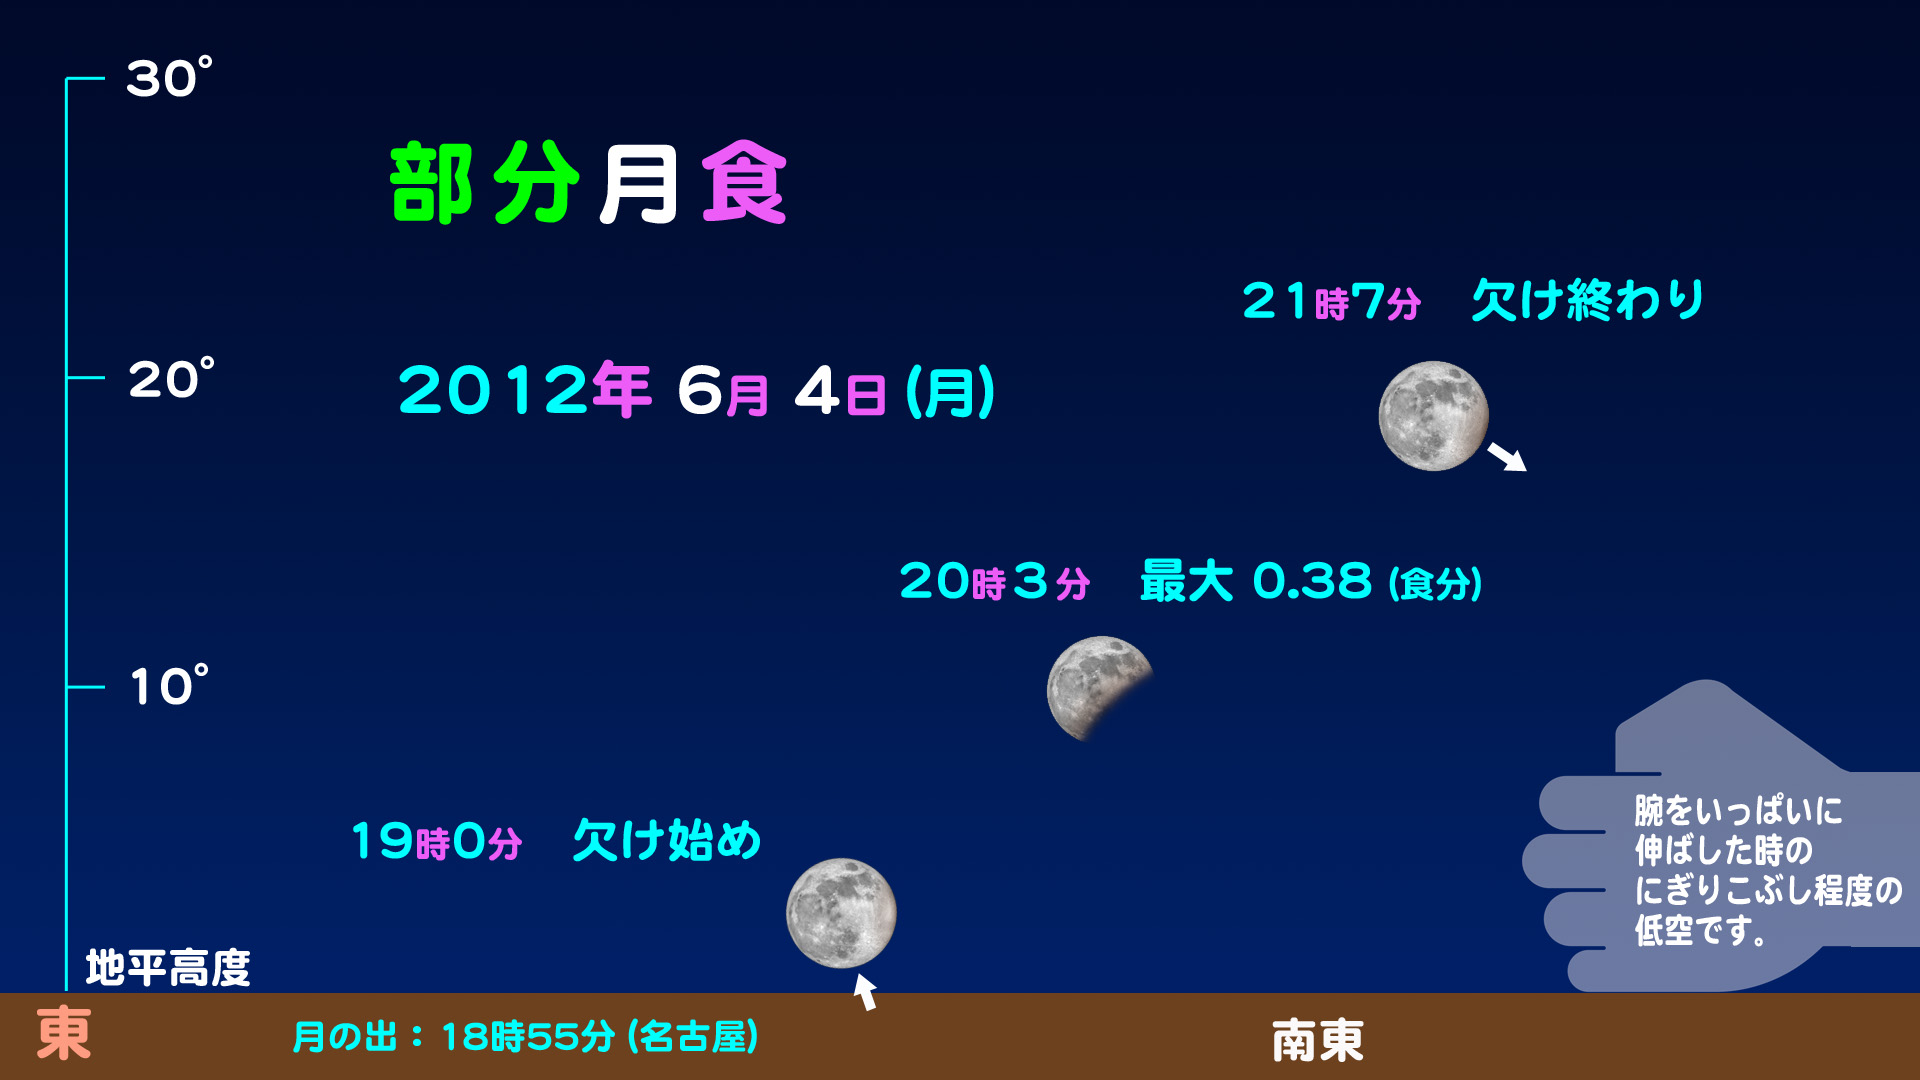 http://www.ncsm.city.nagoya.jp/study/astro/20120604mooneclipse.jpg